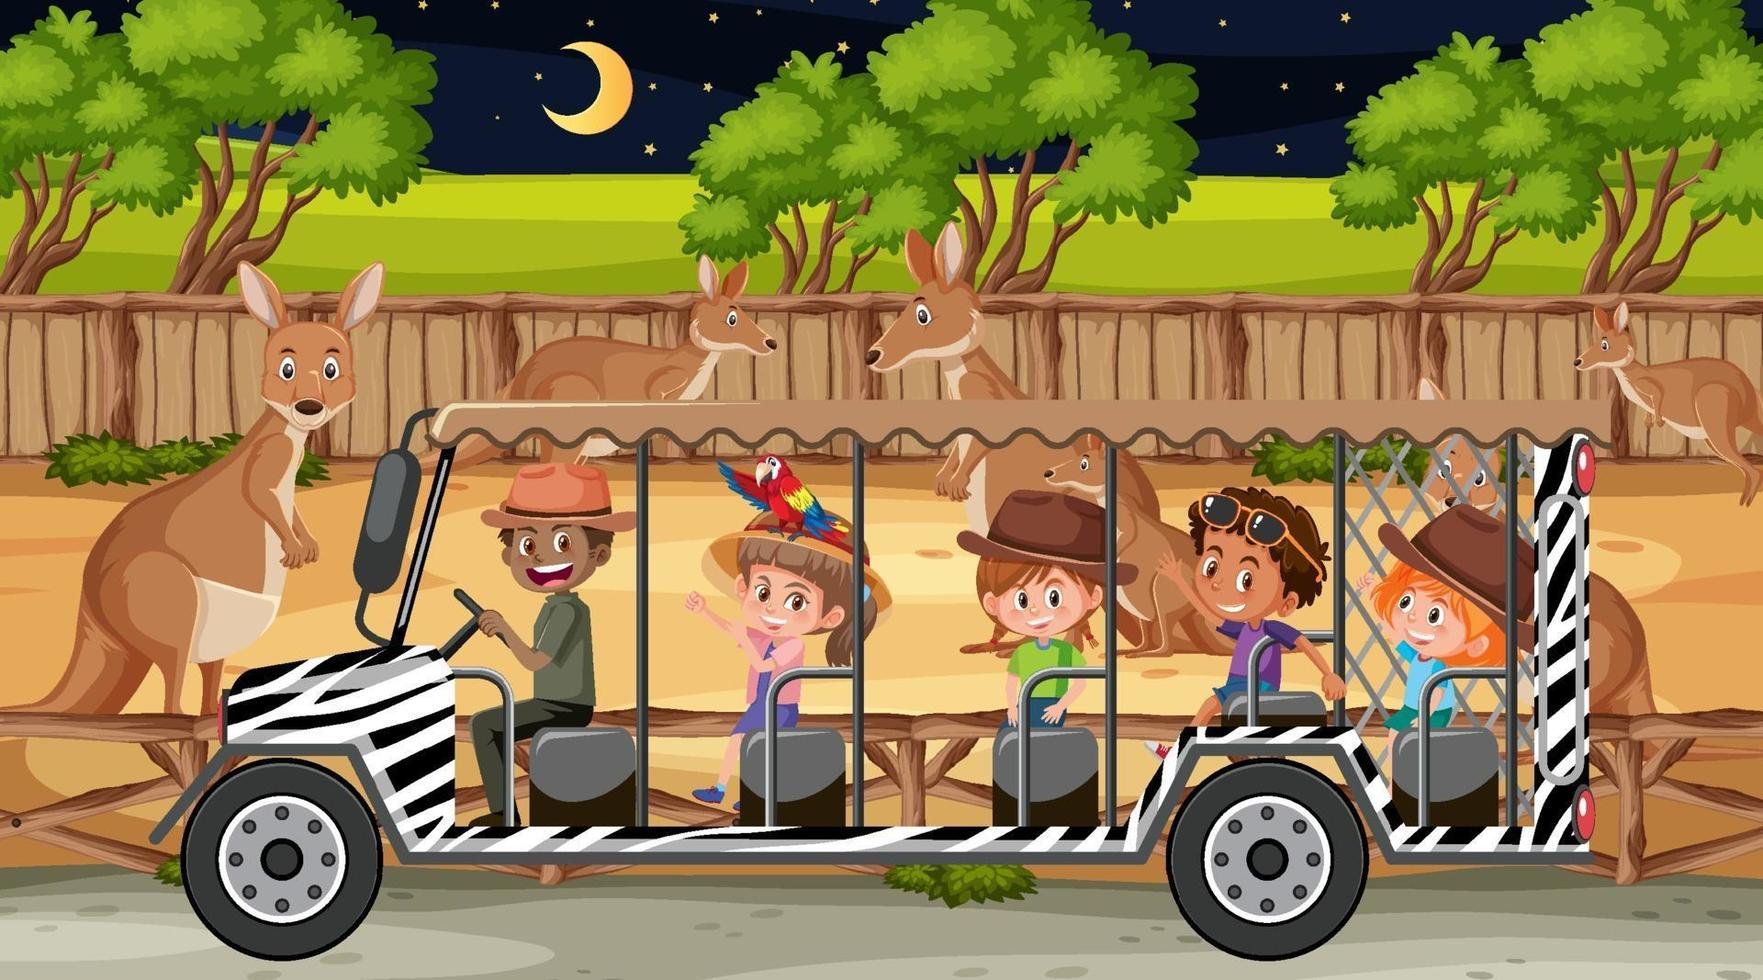 kängurugrupp i safari scen med barn i turistbilen vektor